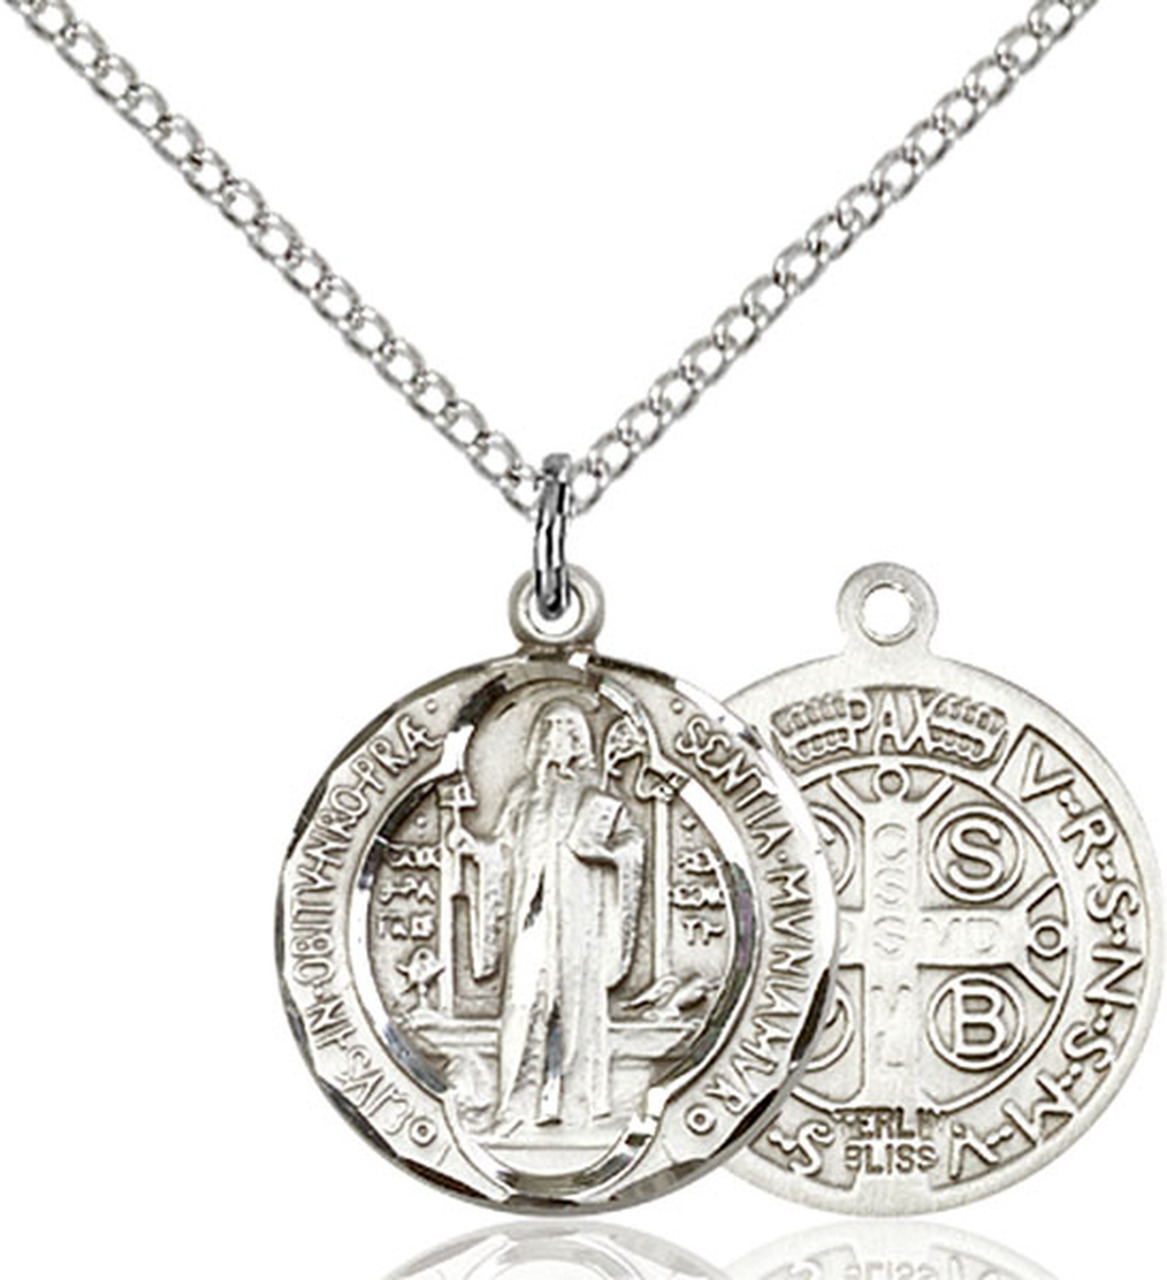 Benedictine medal